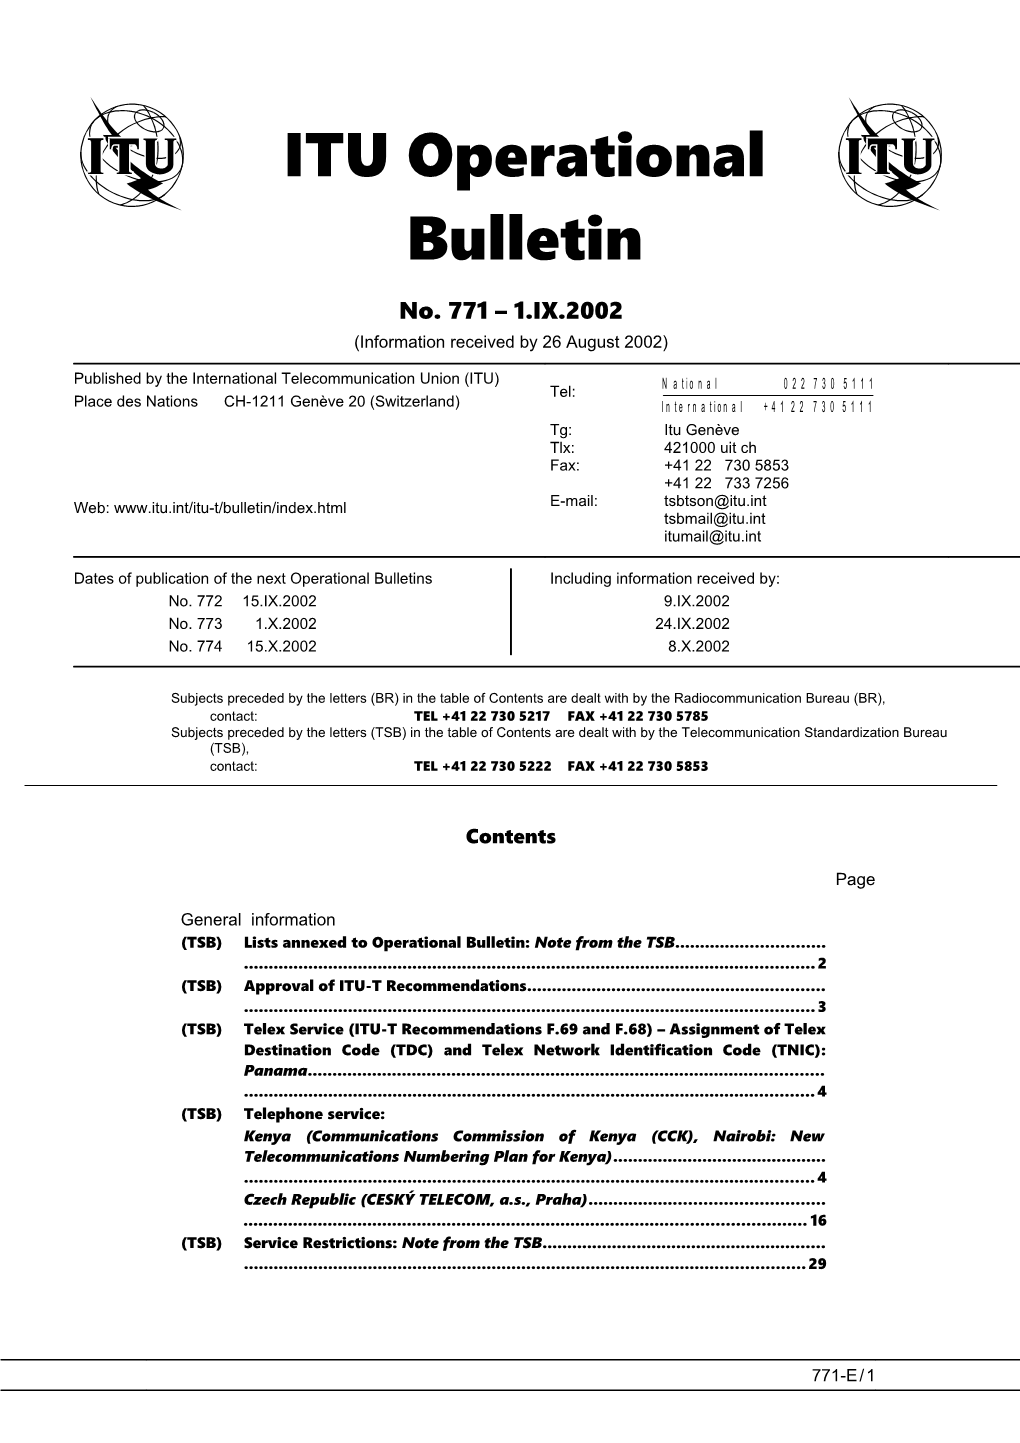 ITU Operational Bulletin 771 - 1.IX.2002